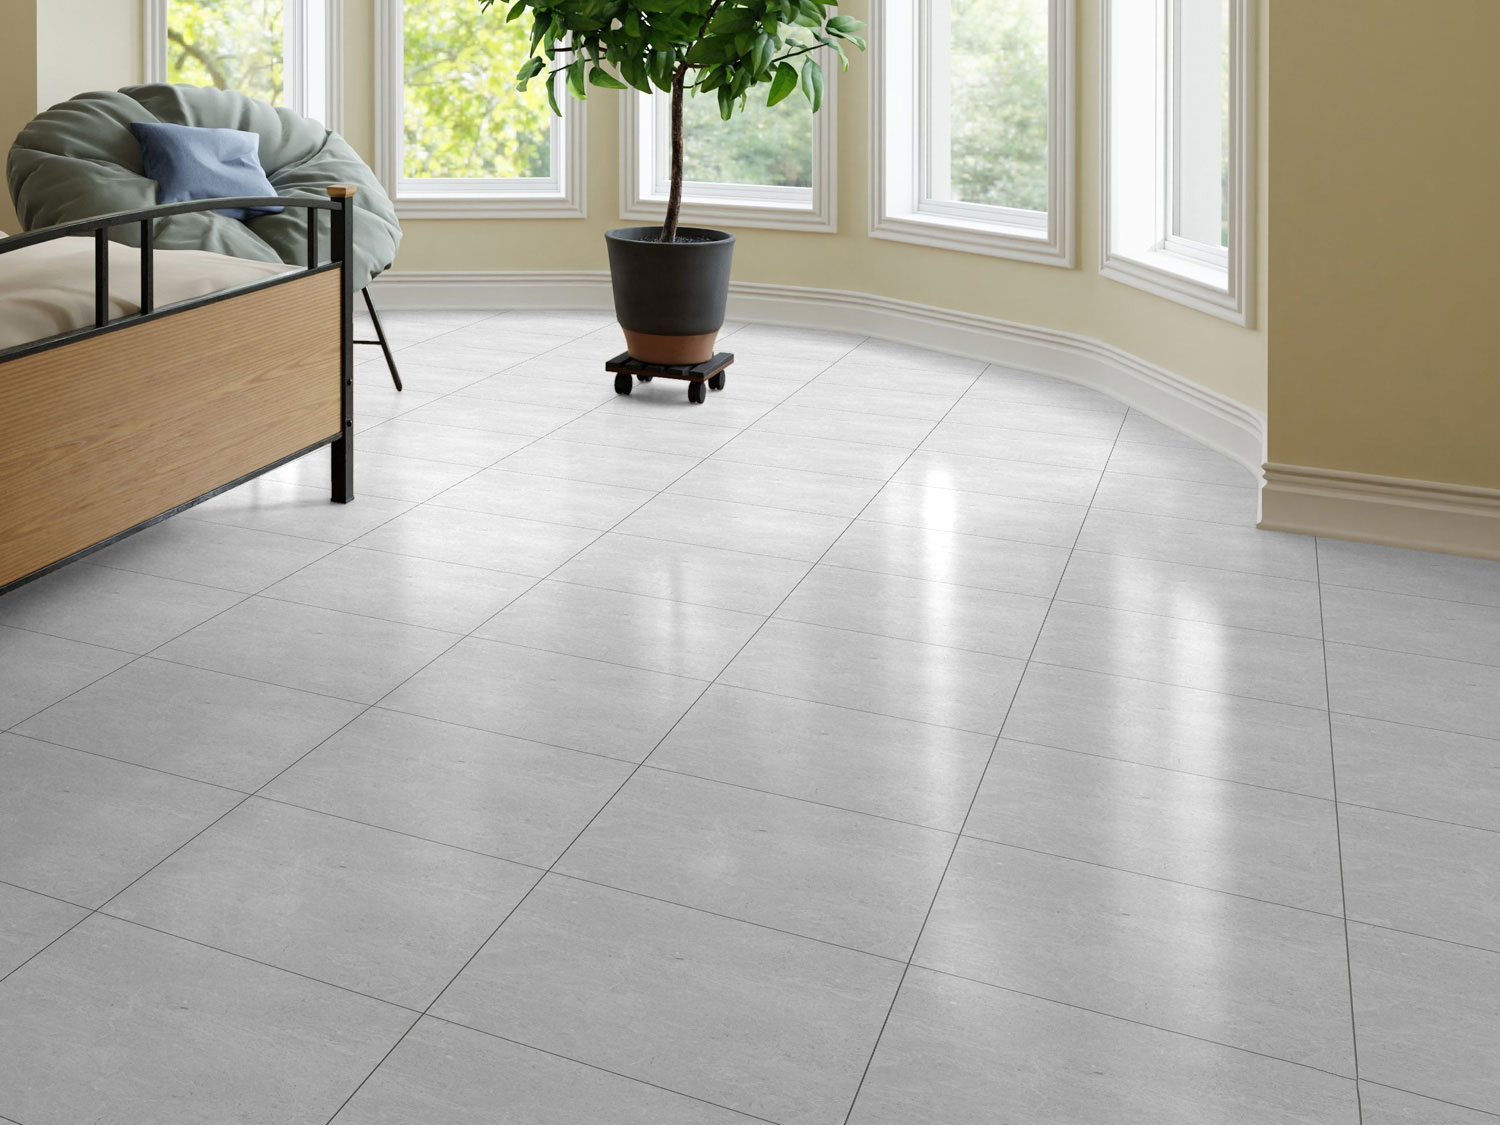 Betta Grey Ceramic Floor Tile - 500 x 500mm